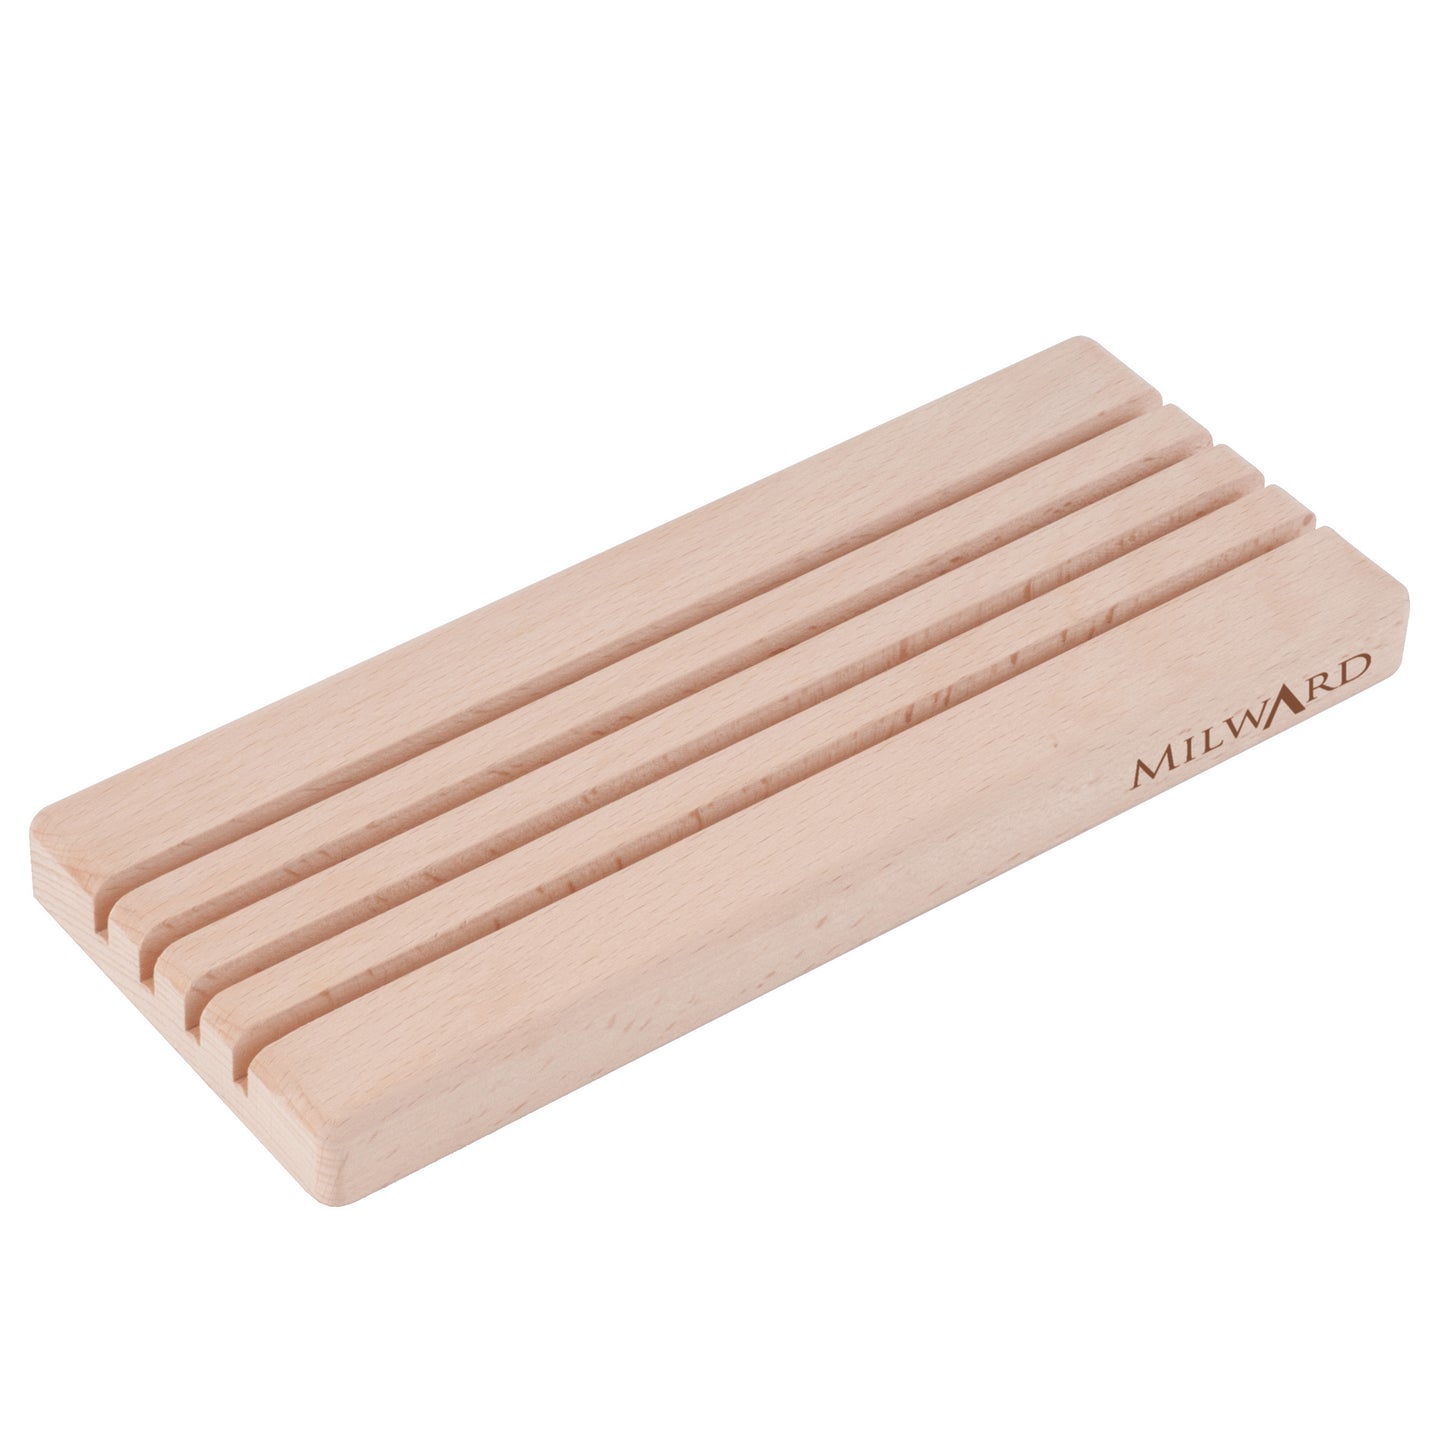 Milward - Wooden Ruler Rack - 4 Slots